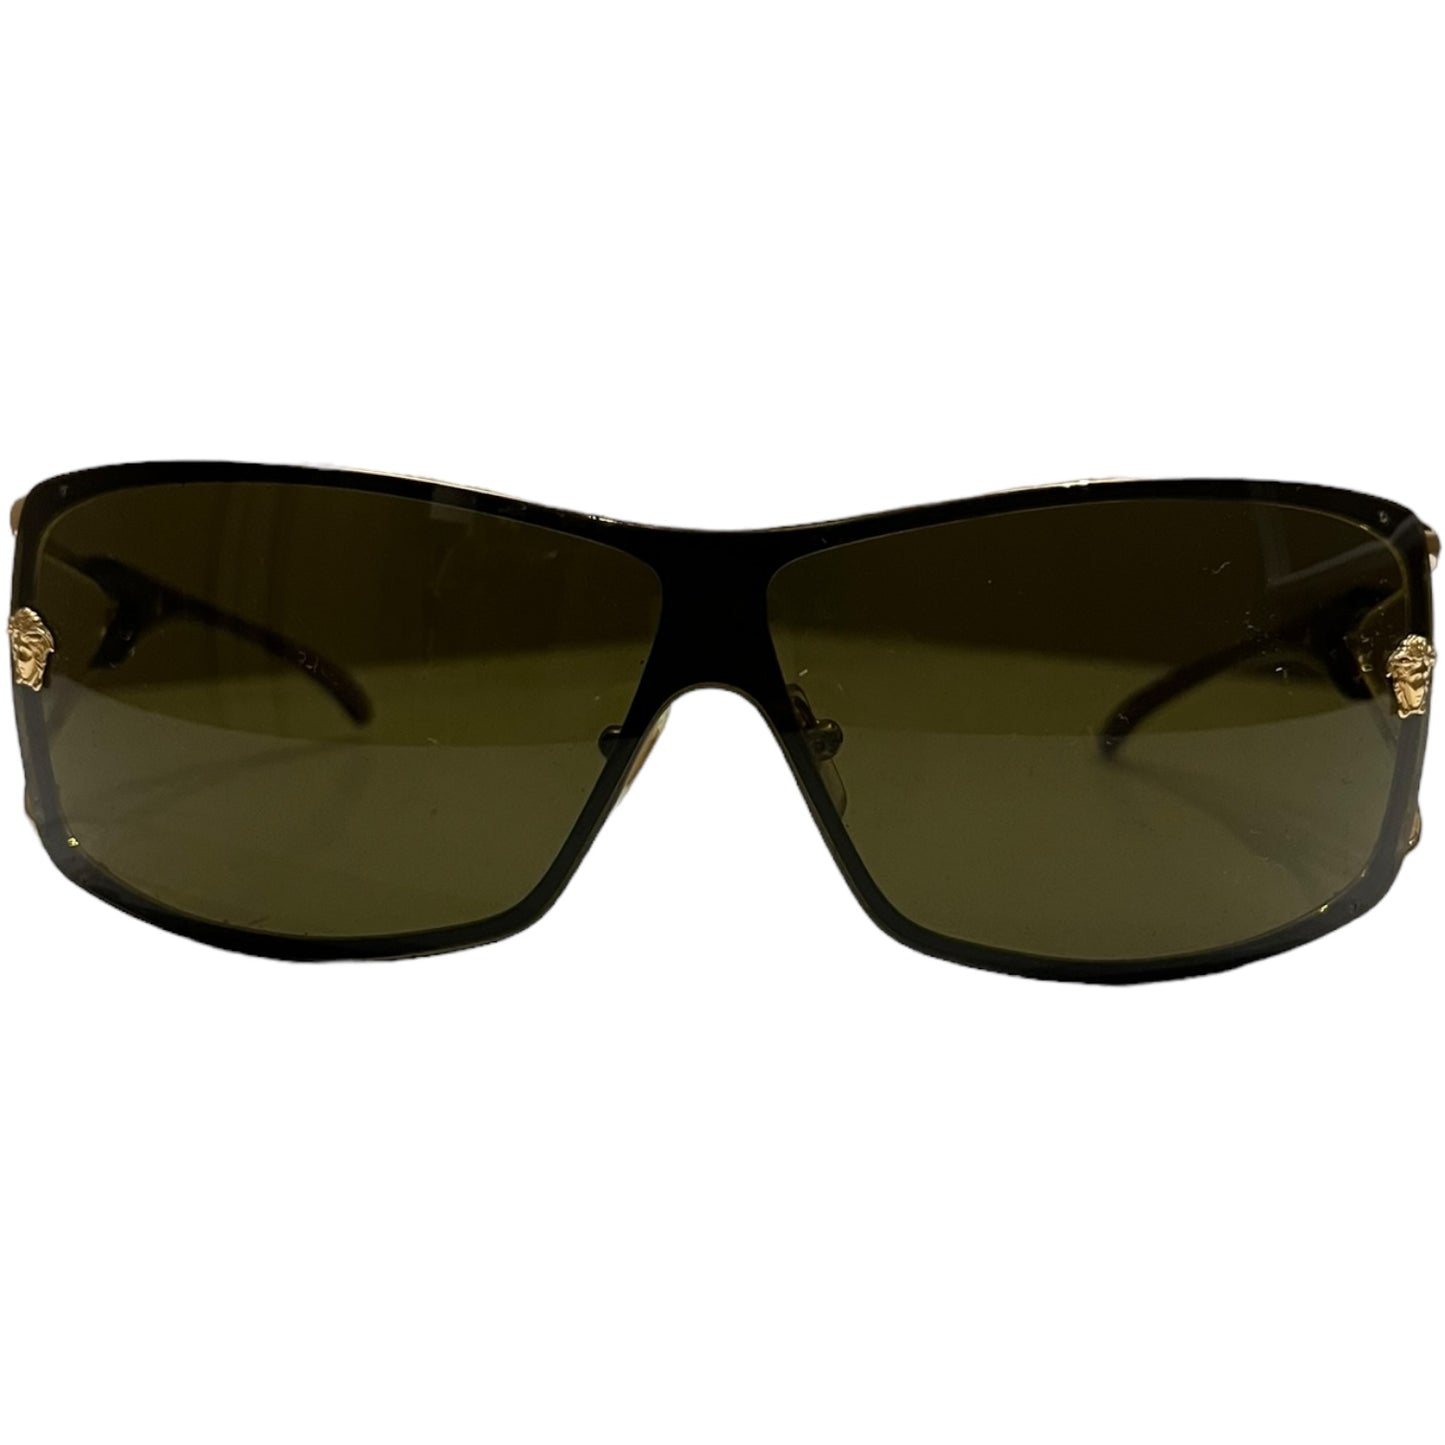 Versace Gold Sunglasses